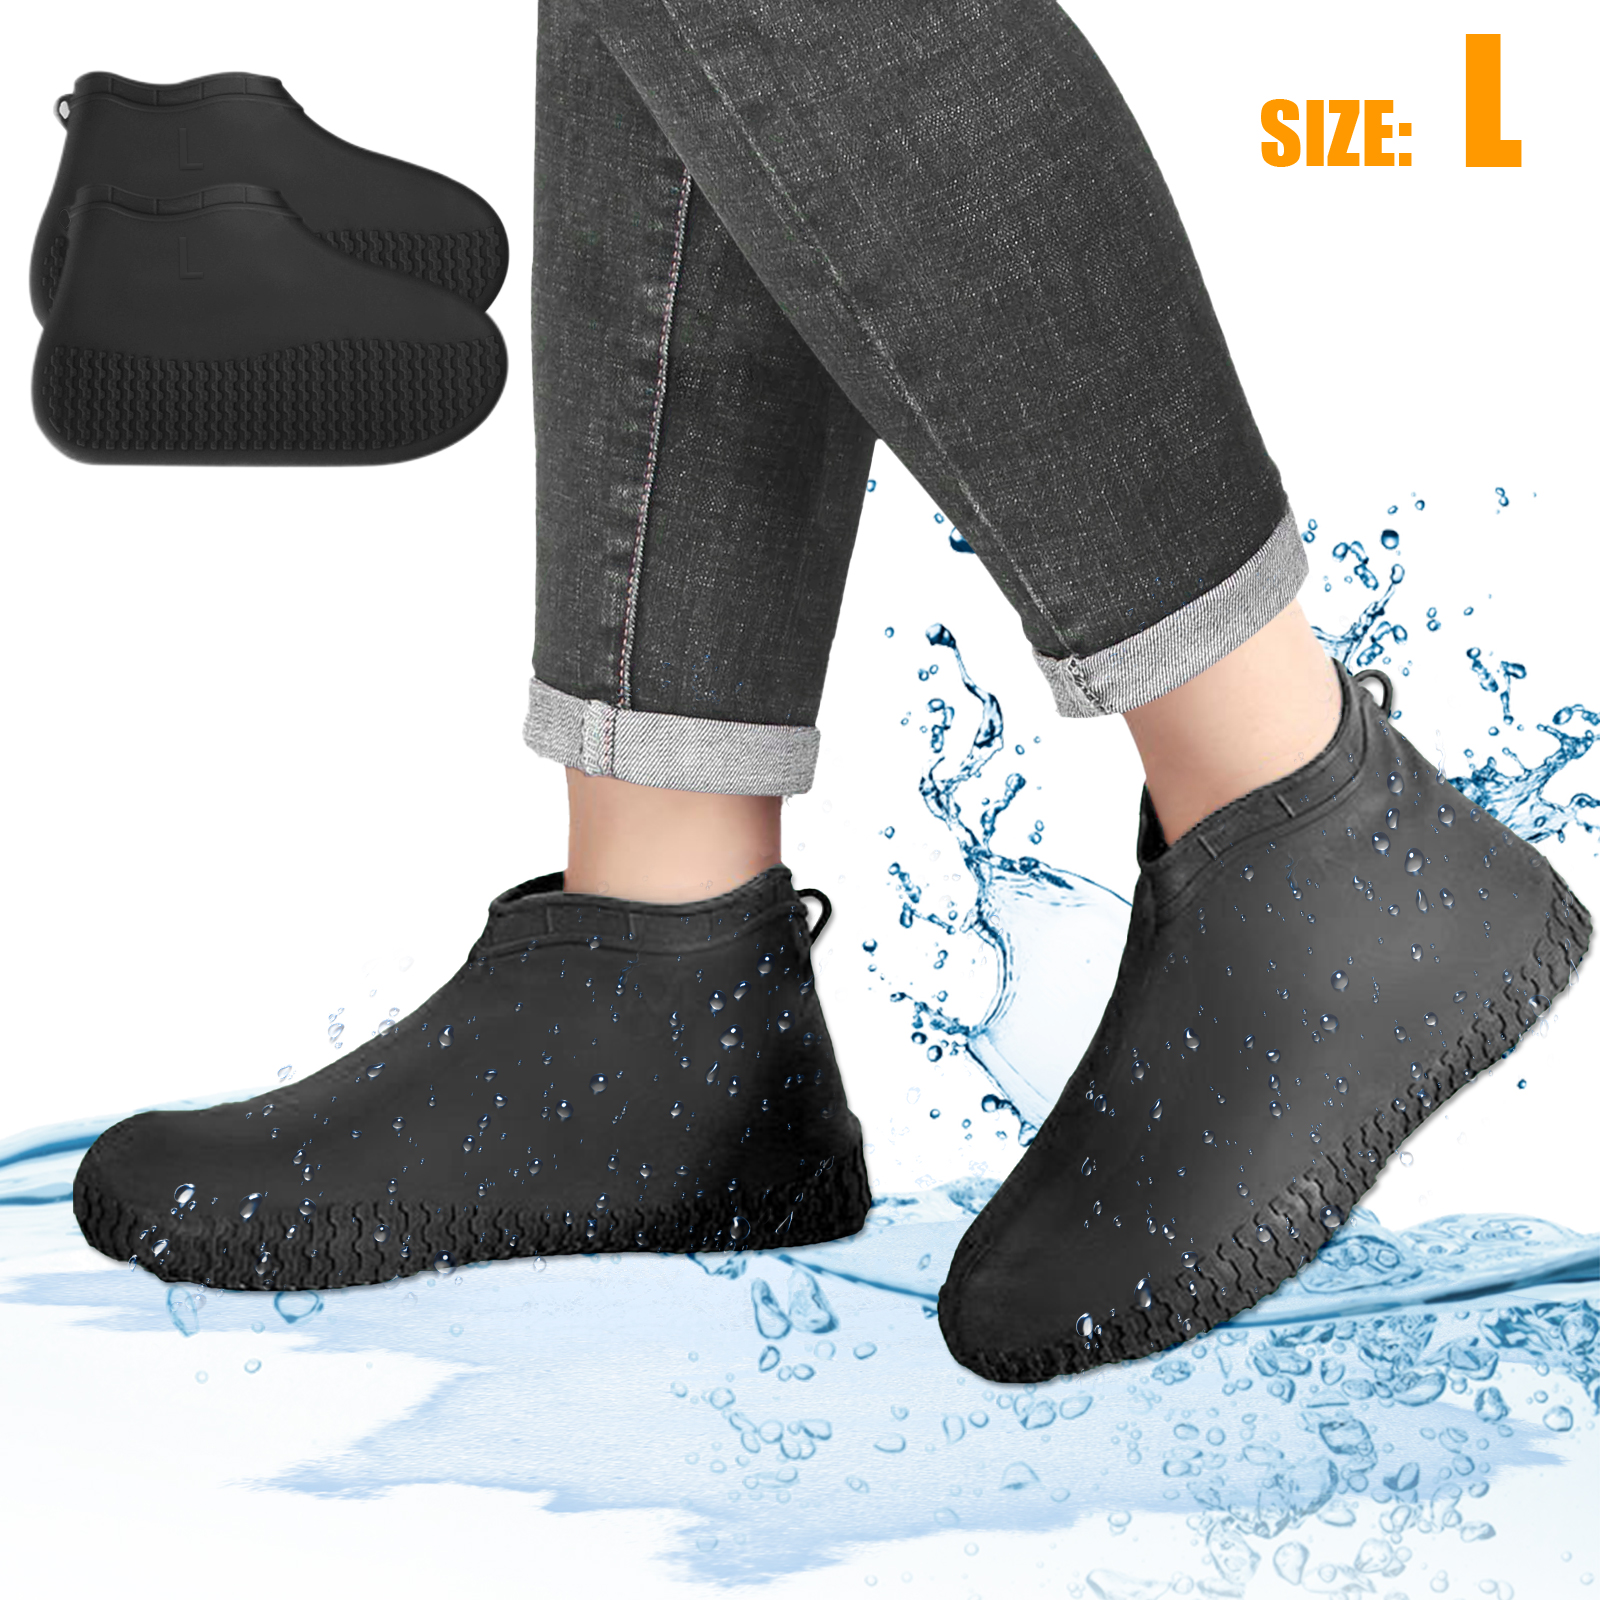 M/L/XL Adults Reusable Waterproof Rain Shoes Overshoes Anti-Slip Covers 